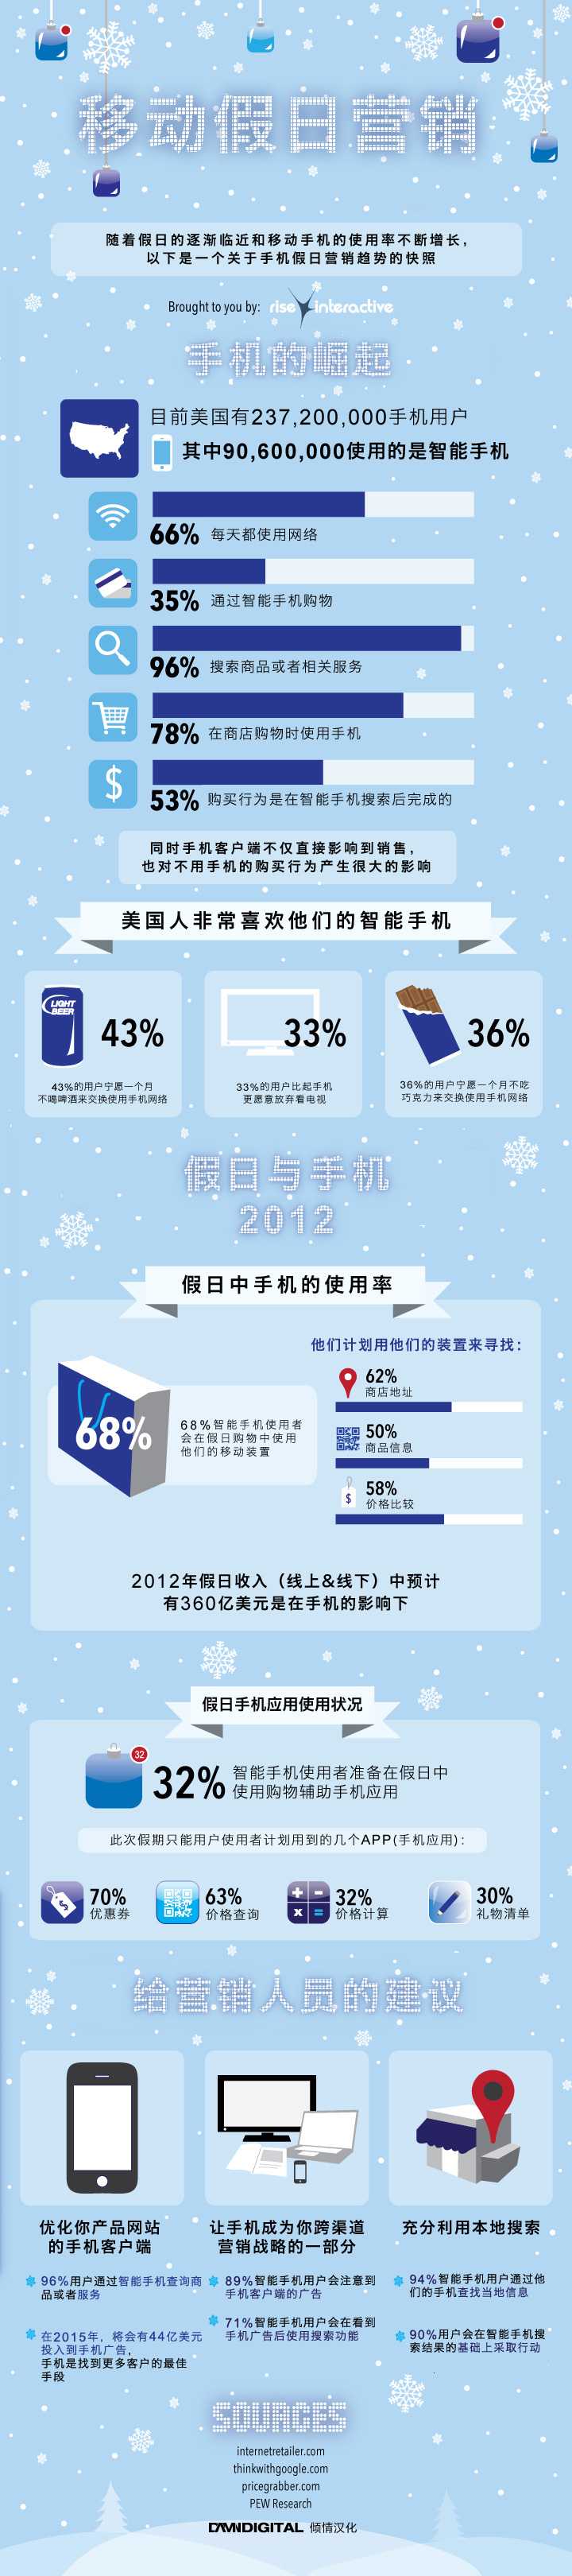 damndigital_mobile-holiday-marketing_2012-12_cn